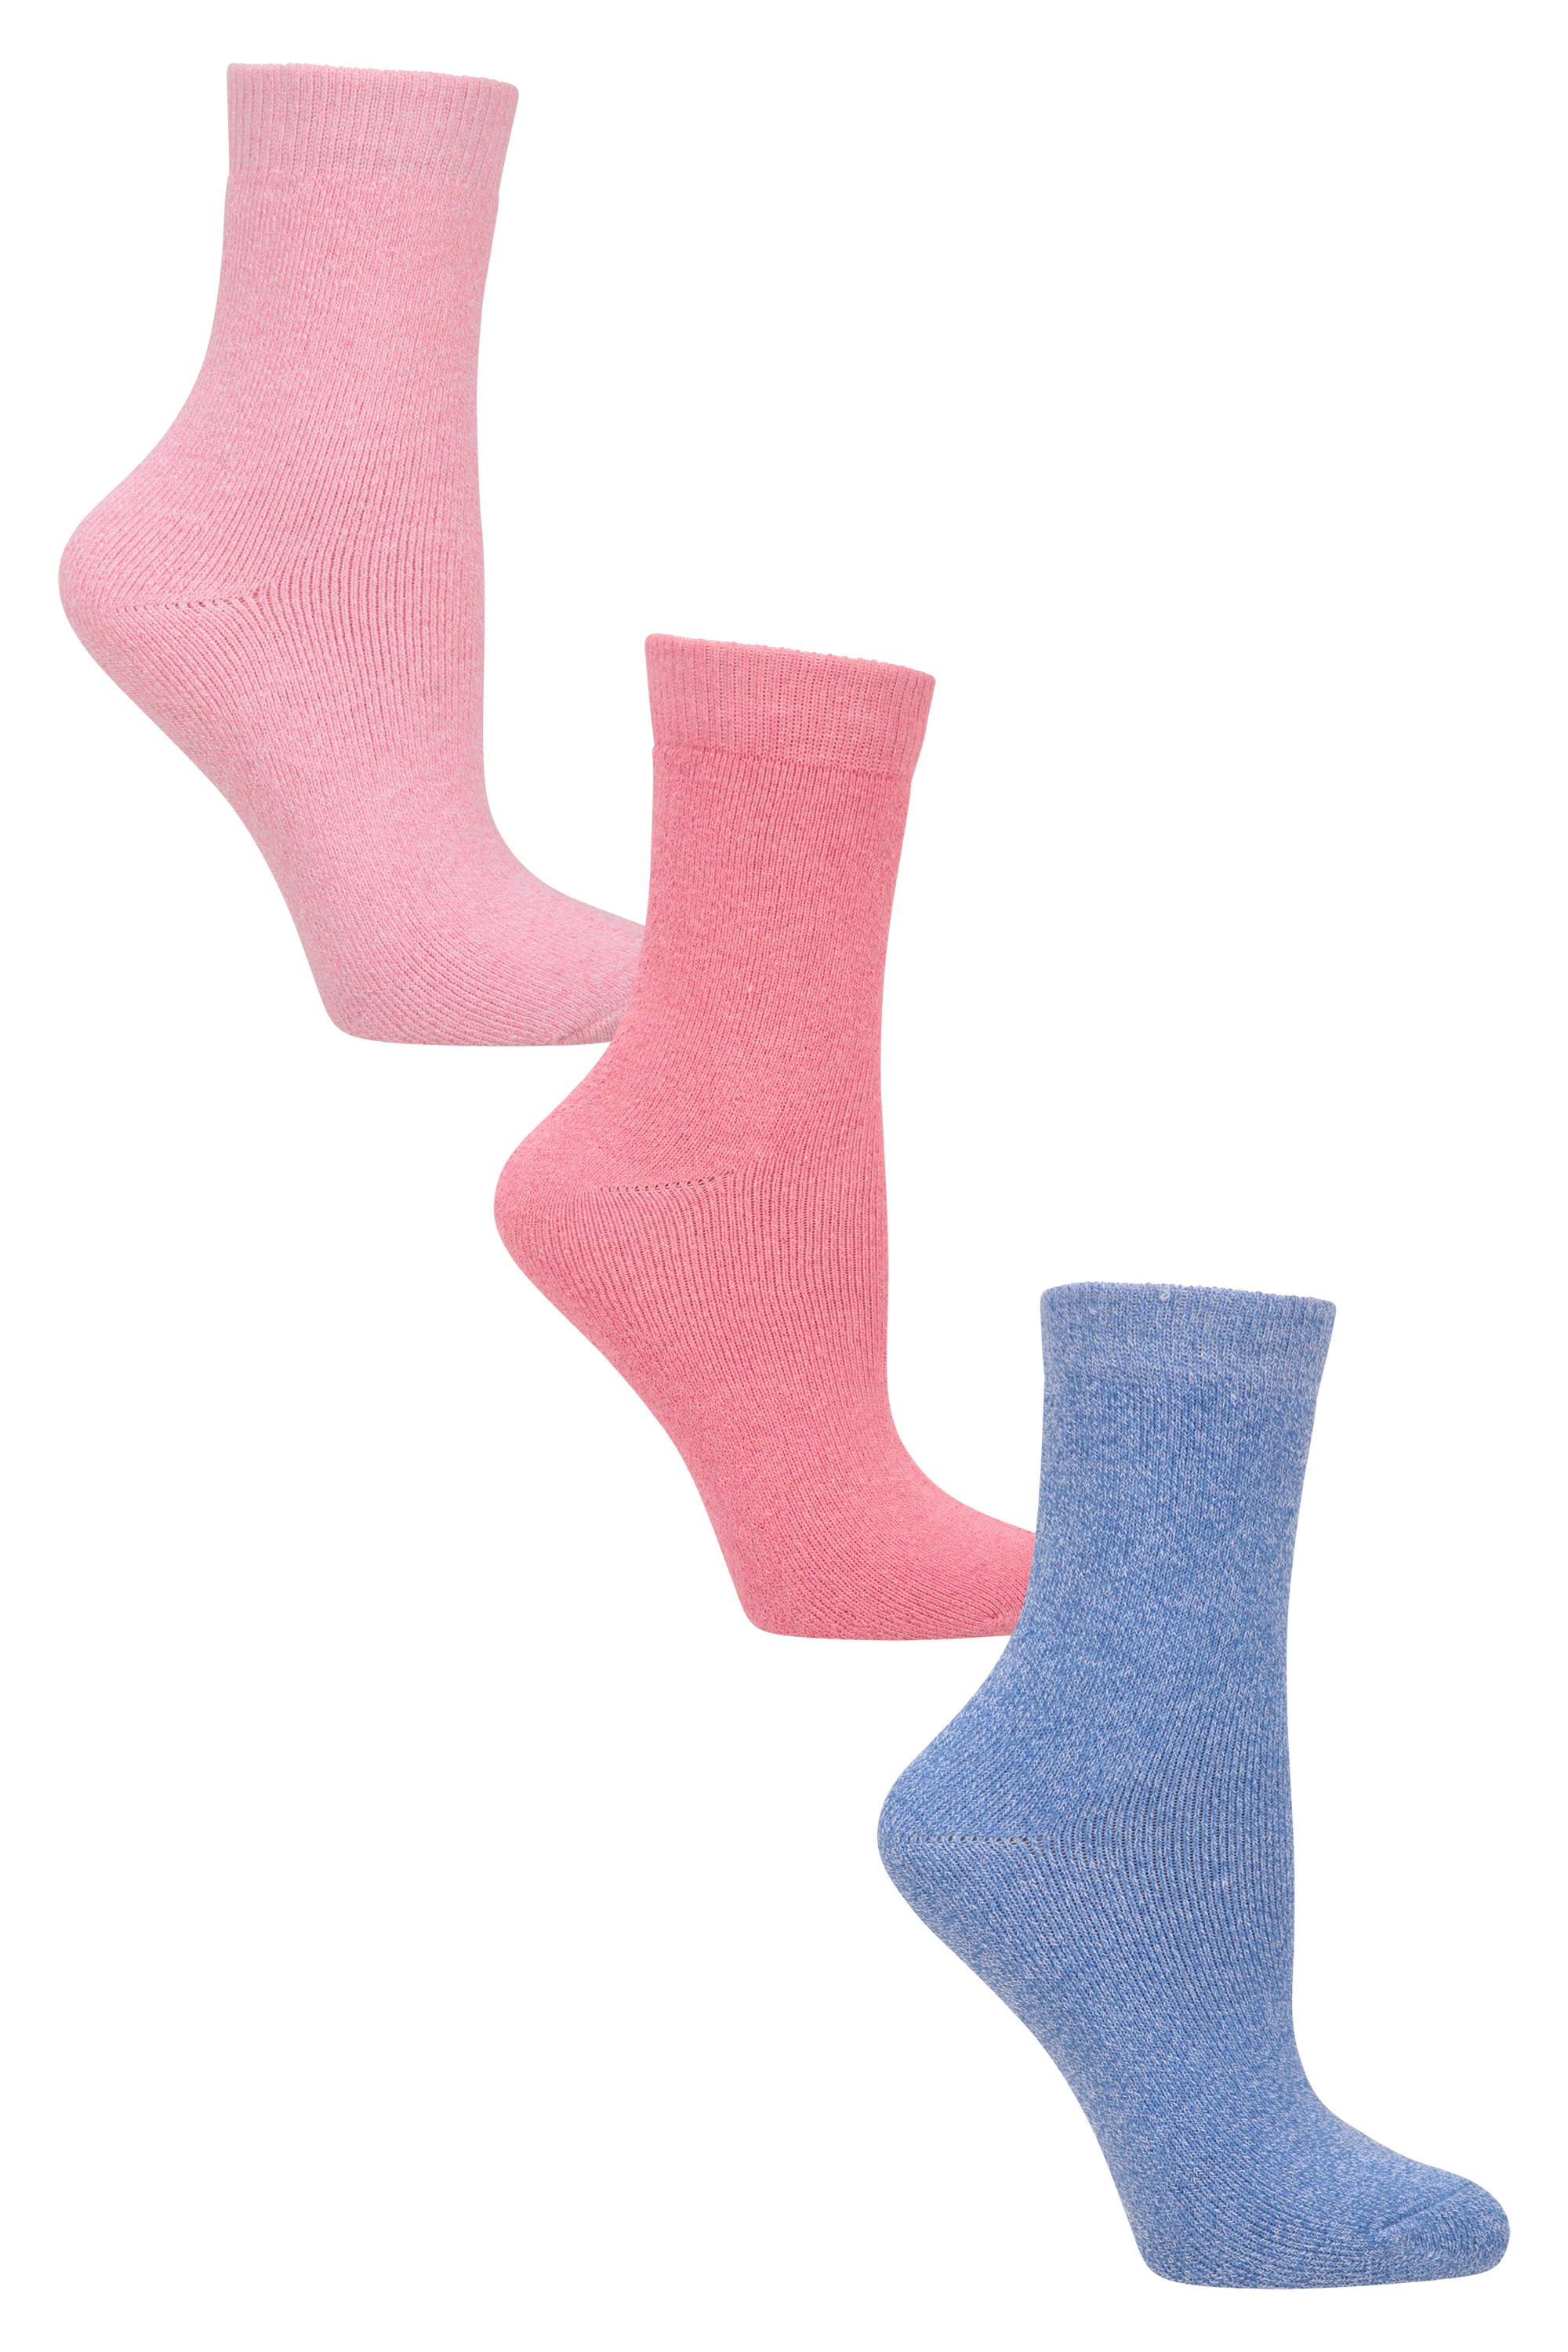 Outdoor Kids Socks - 3 Pack - Light Pink